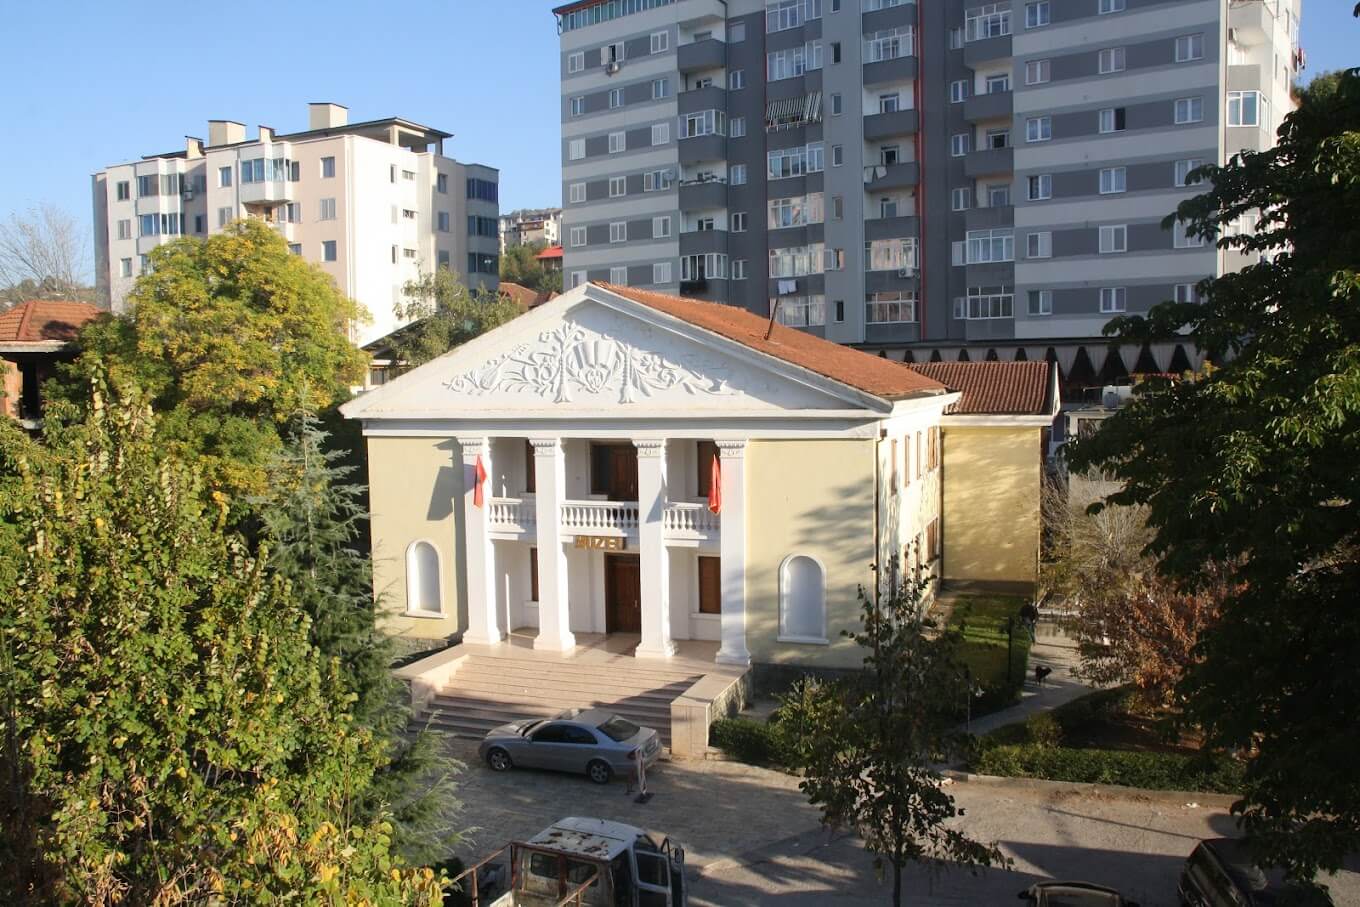 Muzeu i Dibrës, diber, visit albania, travel, culture, shqiperi, kulture, visit dibras museum, visit north dibra, dibra near macedonia